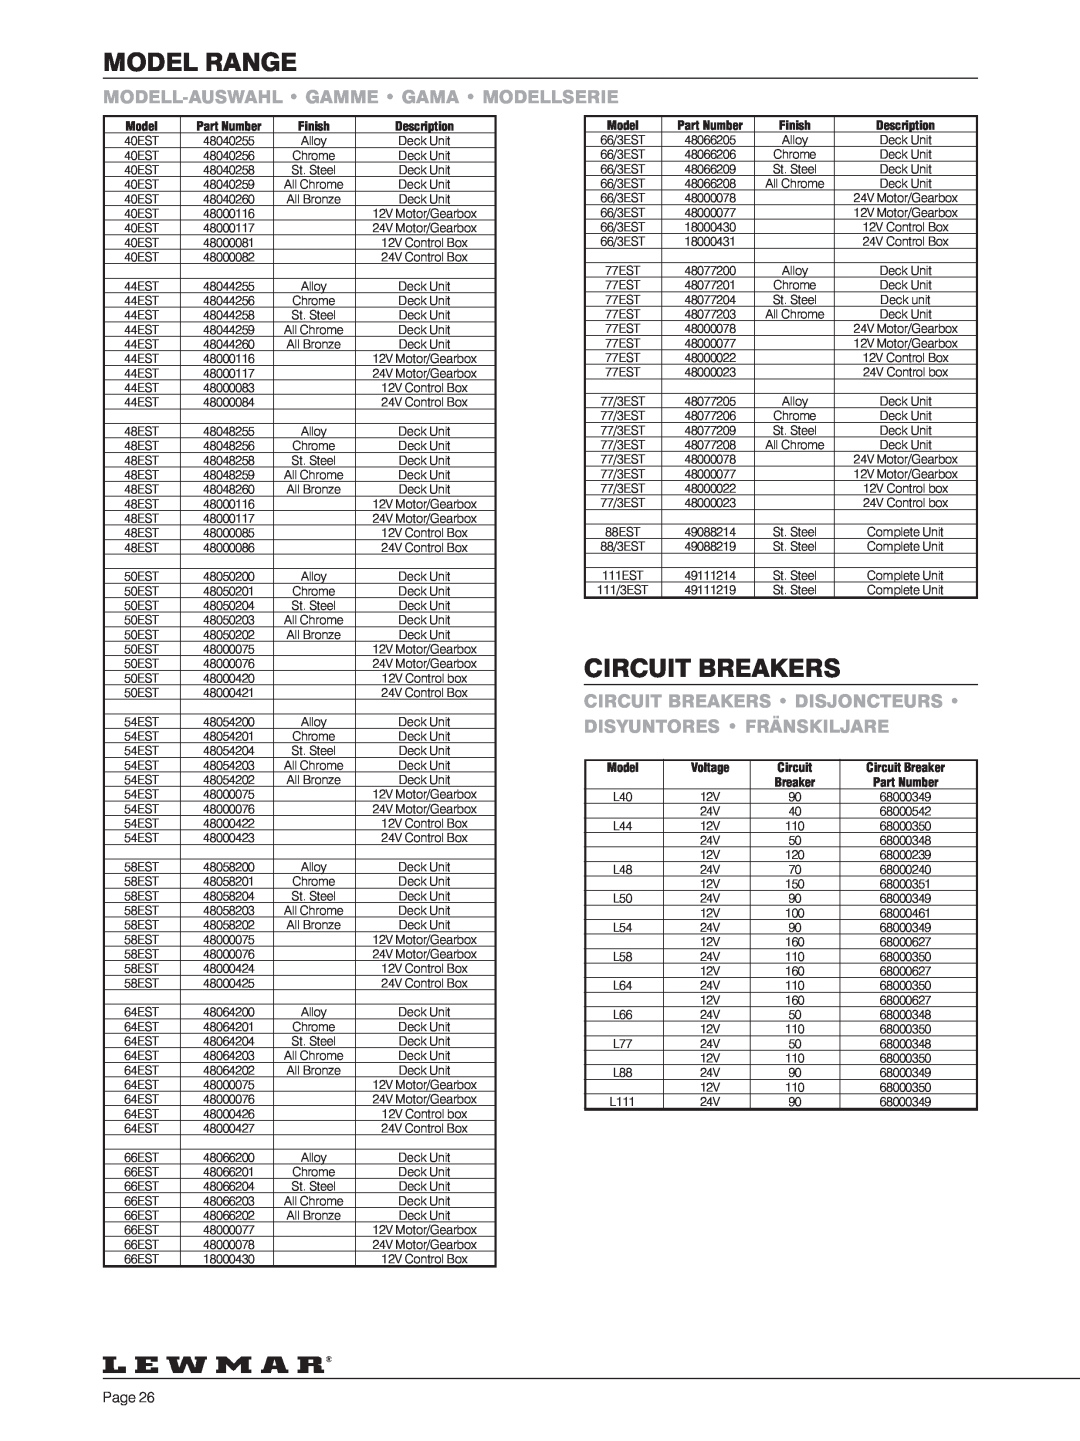 Lewmar 40-111 manual Model Range, Circuit Breakers, Modell-Auswahl Gamme Gama Modellserie, Part Number, Finish, Description 